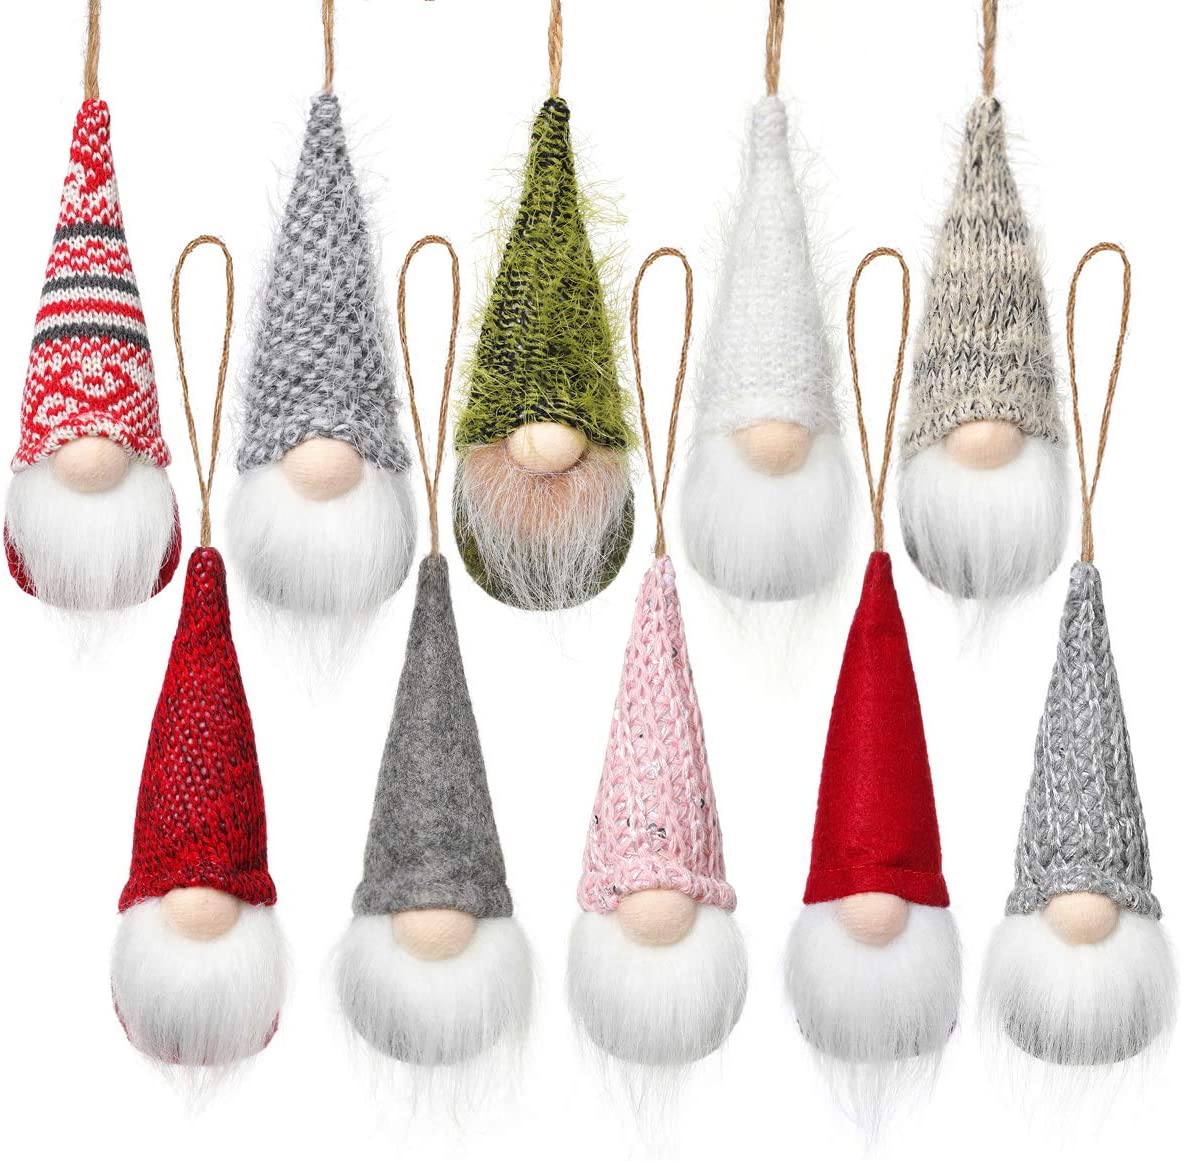 HAPPIWIZ Christmas Tree Hanging Gnomes Ornaments Set of 10